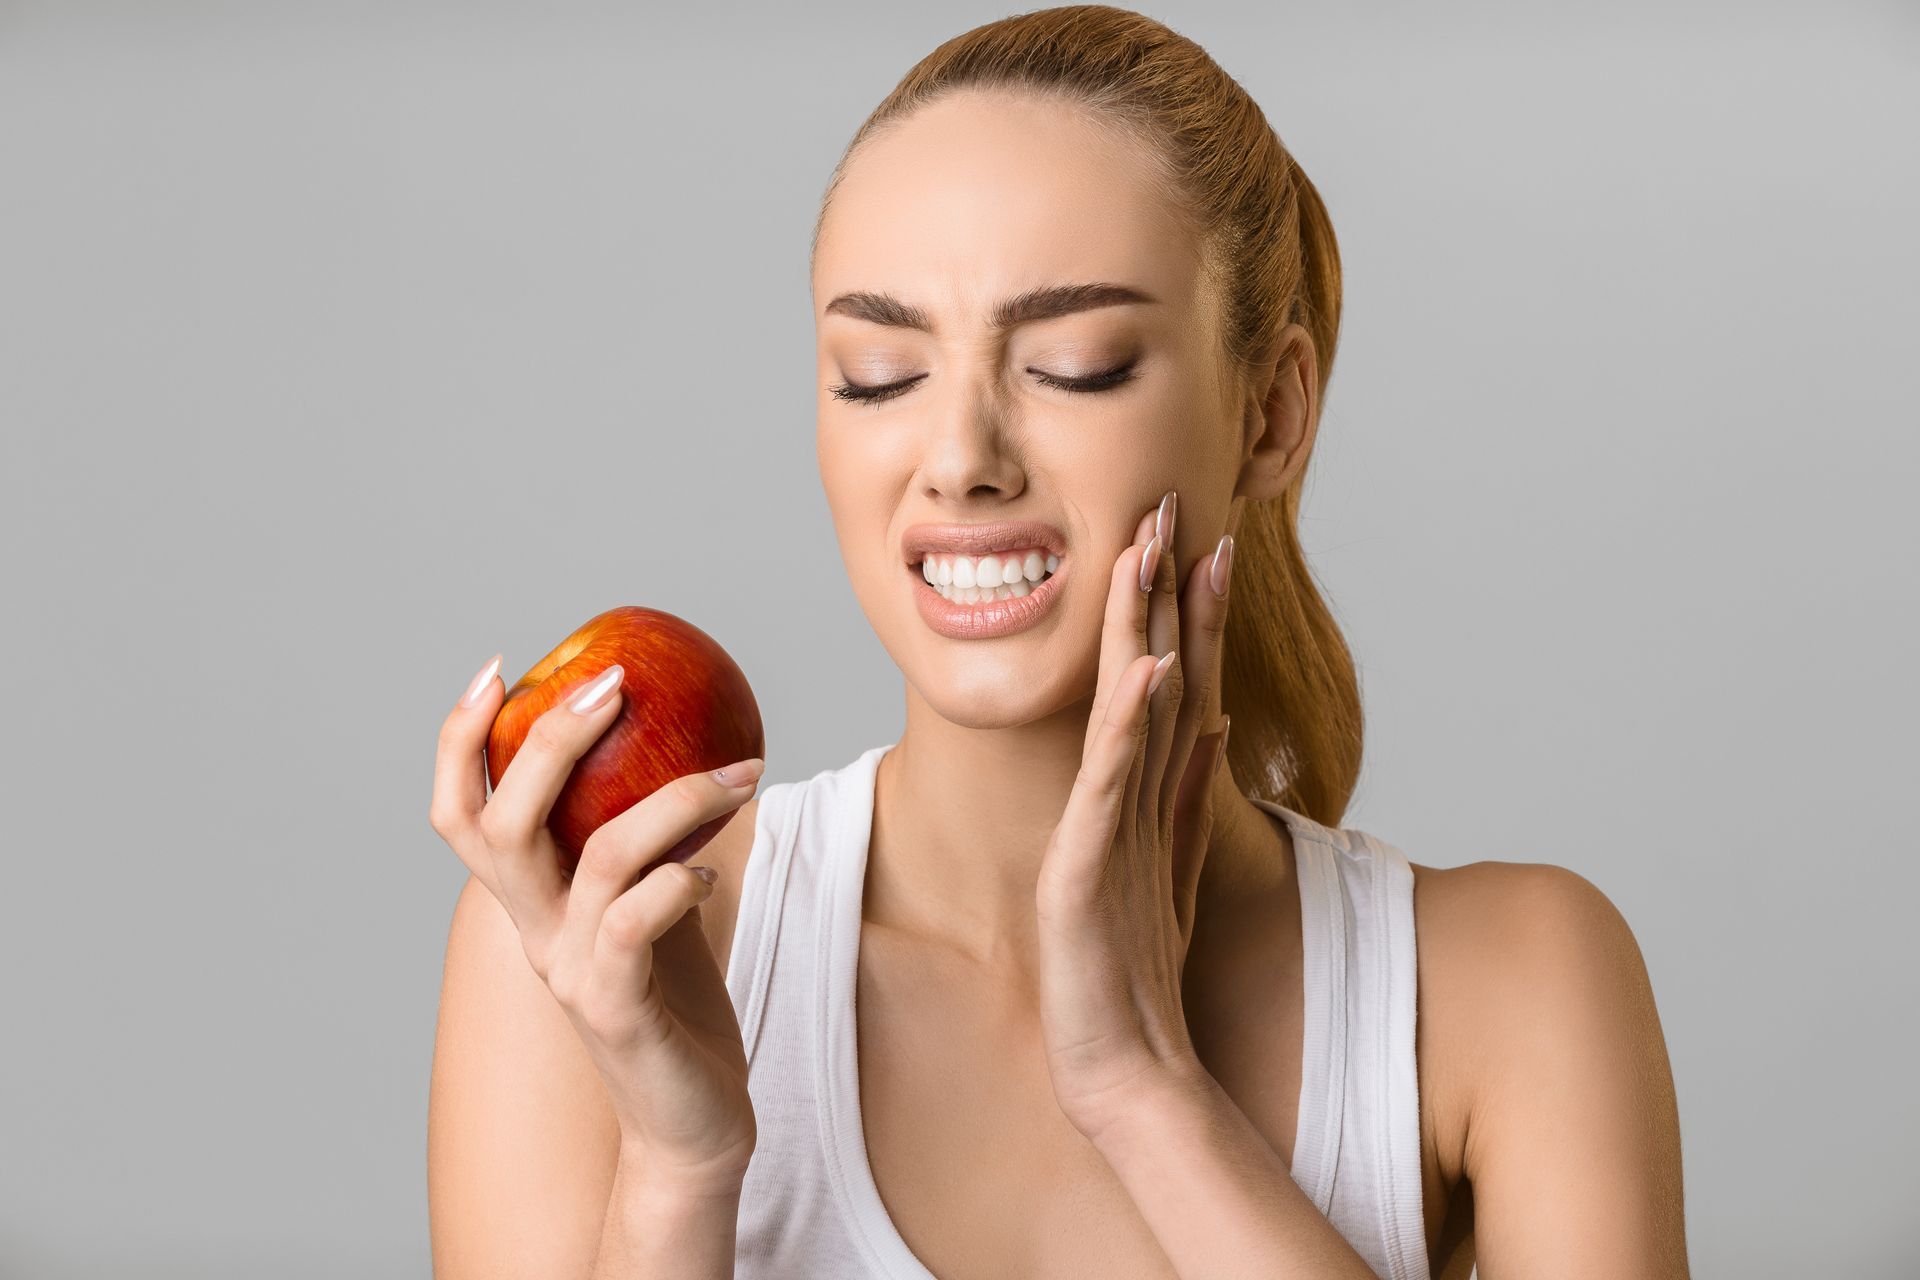 dentine sensitivity due to acidic foods